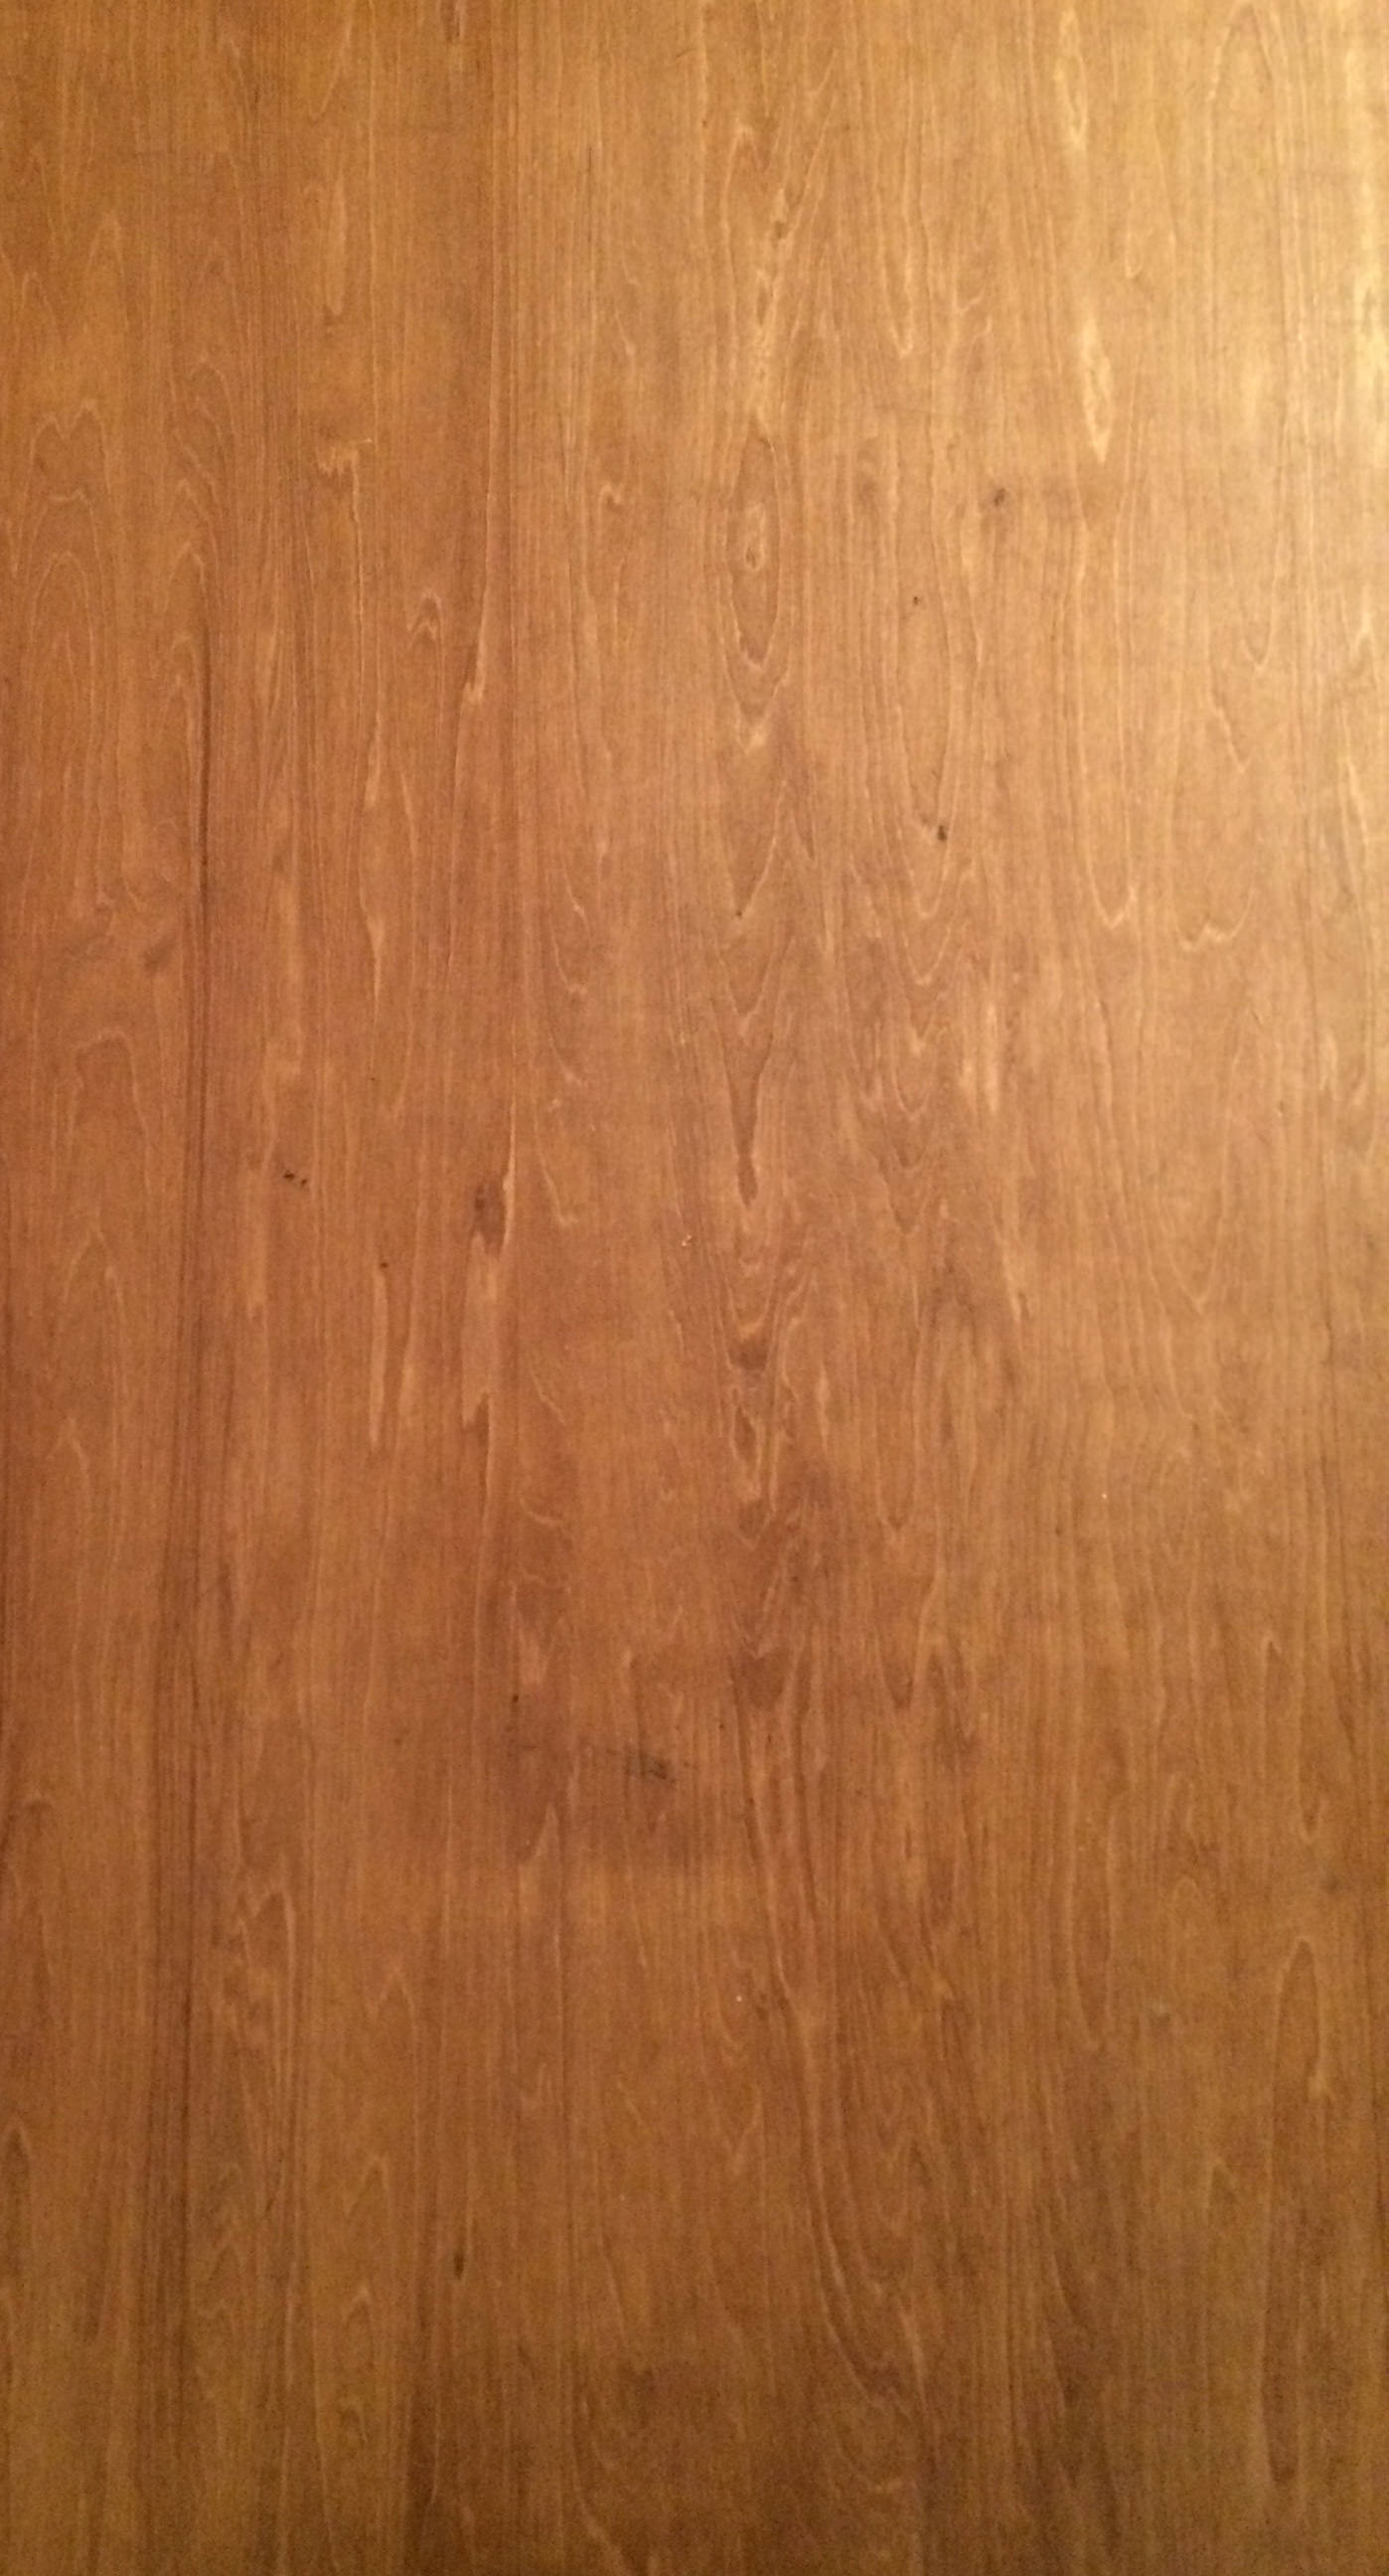 木板茶色 | wallpaper.sc iPhone6sPlus壁紙